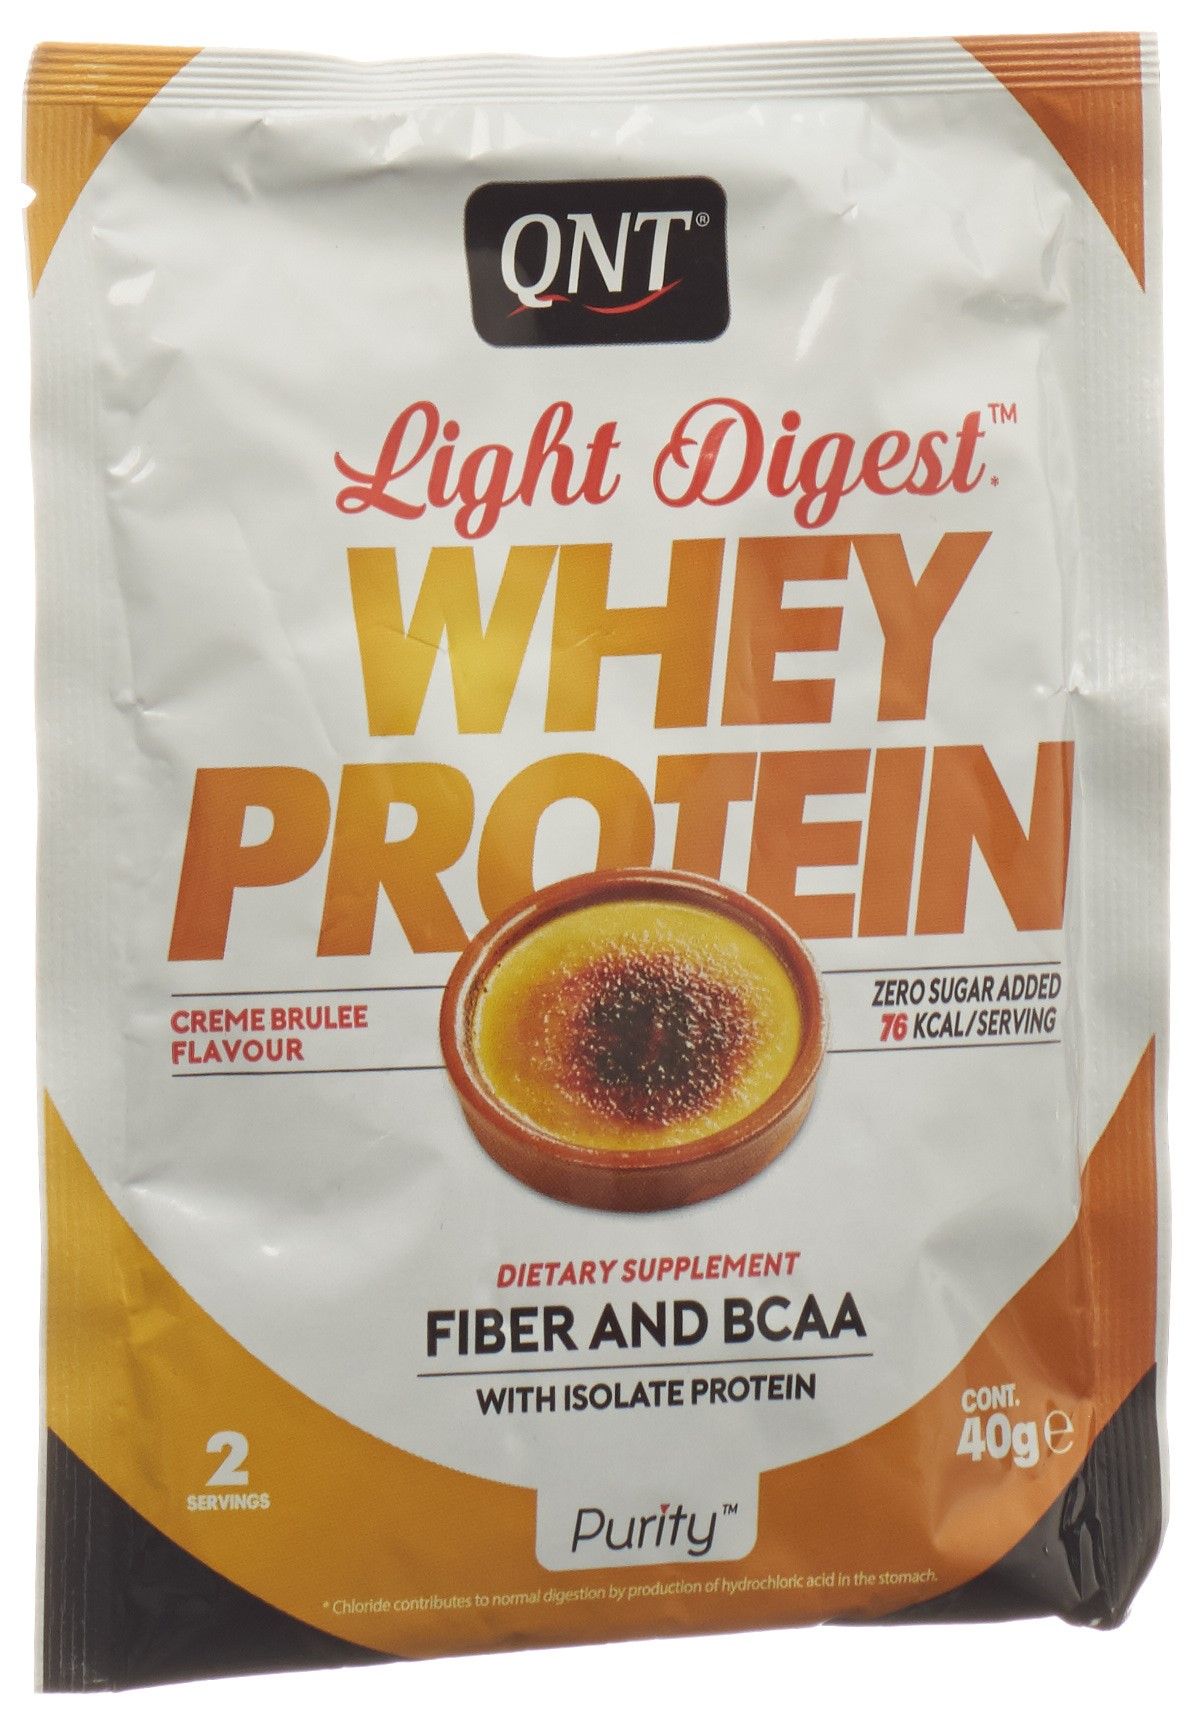 фото Протеин qnt whey protein light digest, 40 г, creme brulee